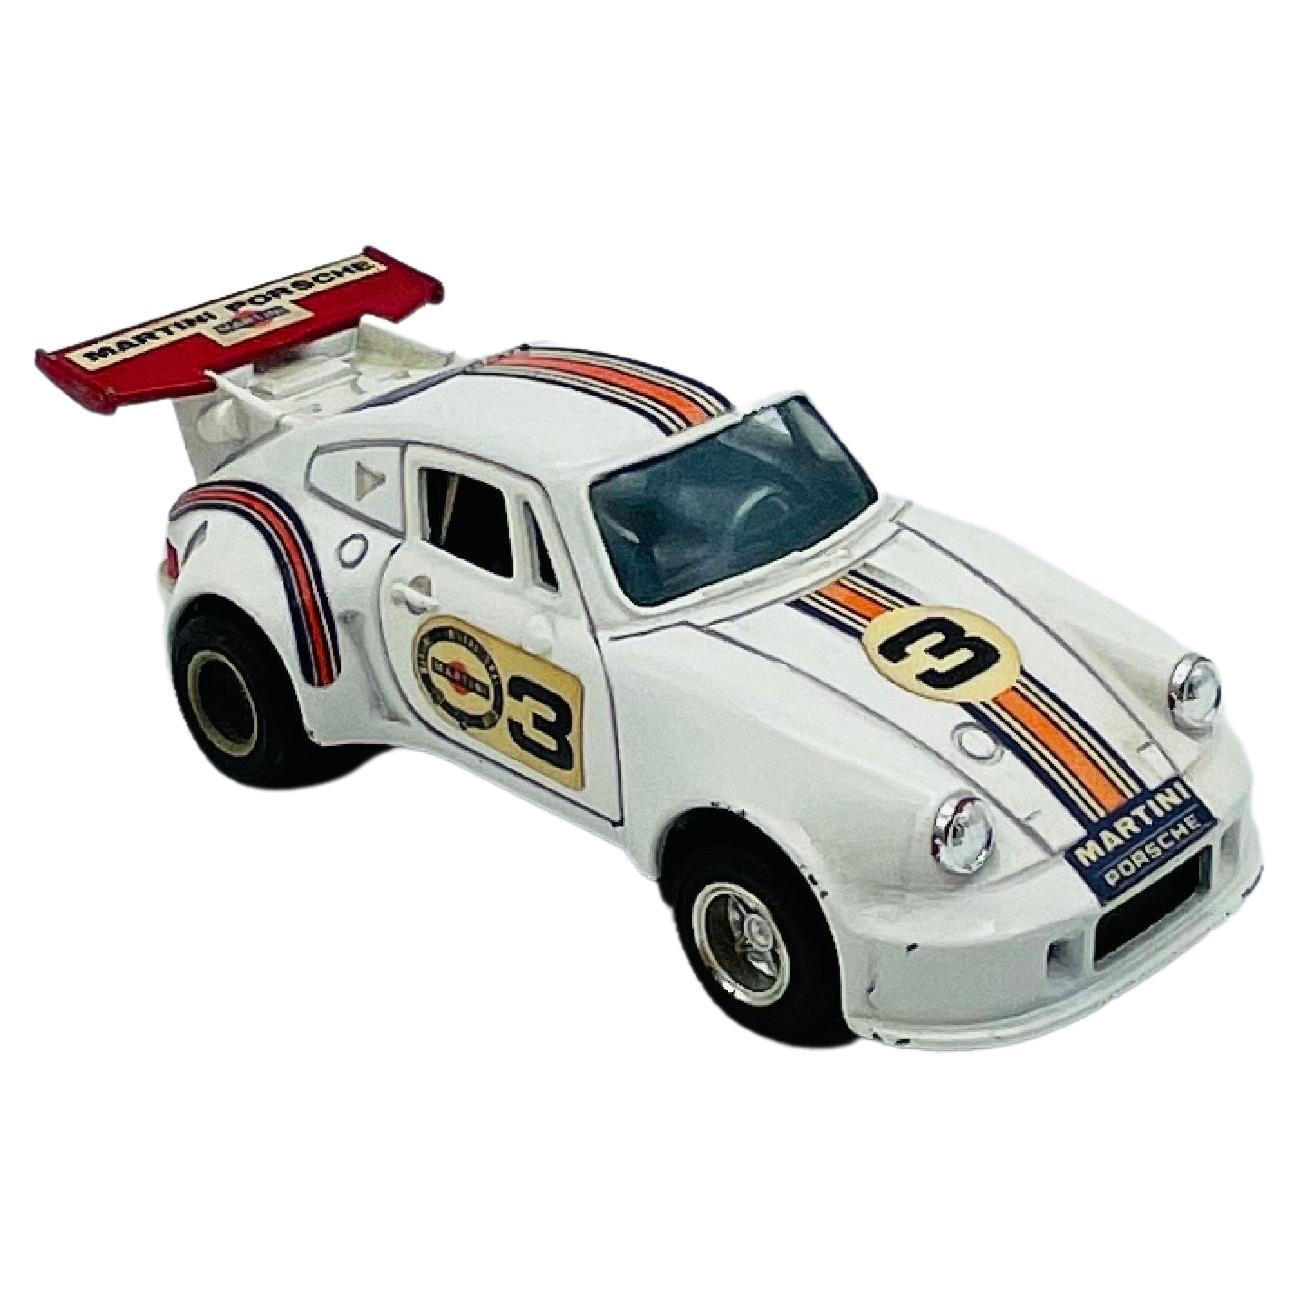 Porsche Turbo Club Modell Auto Shinsei Mini power 1:37 Skulptur. Seltenheit im Angebot 1